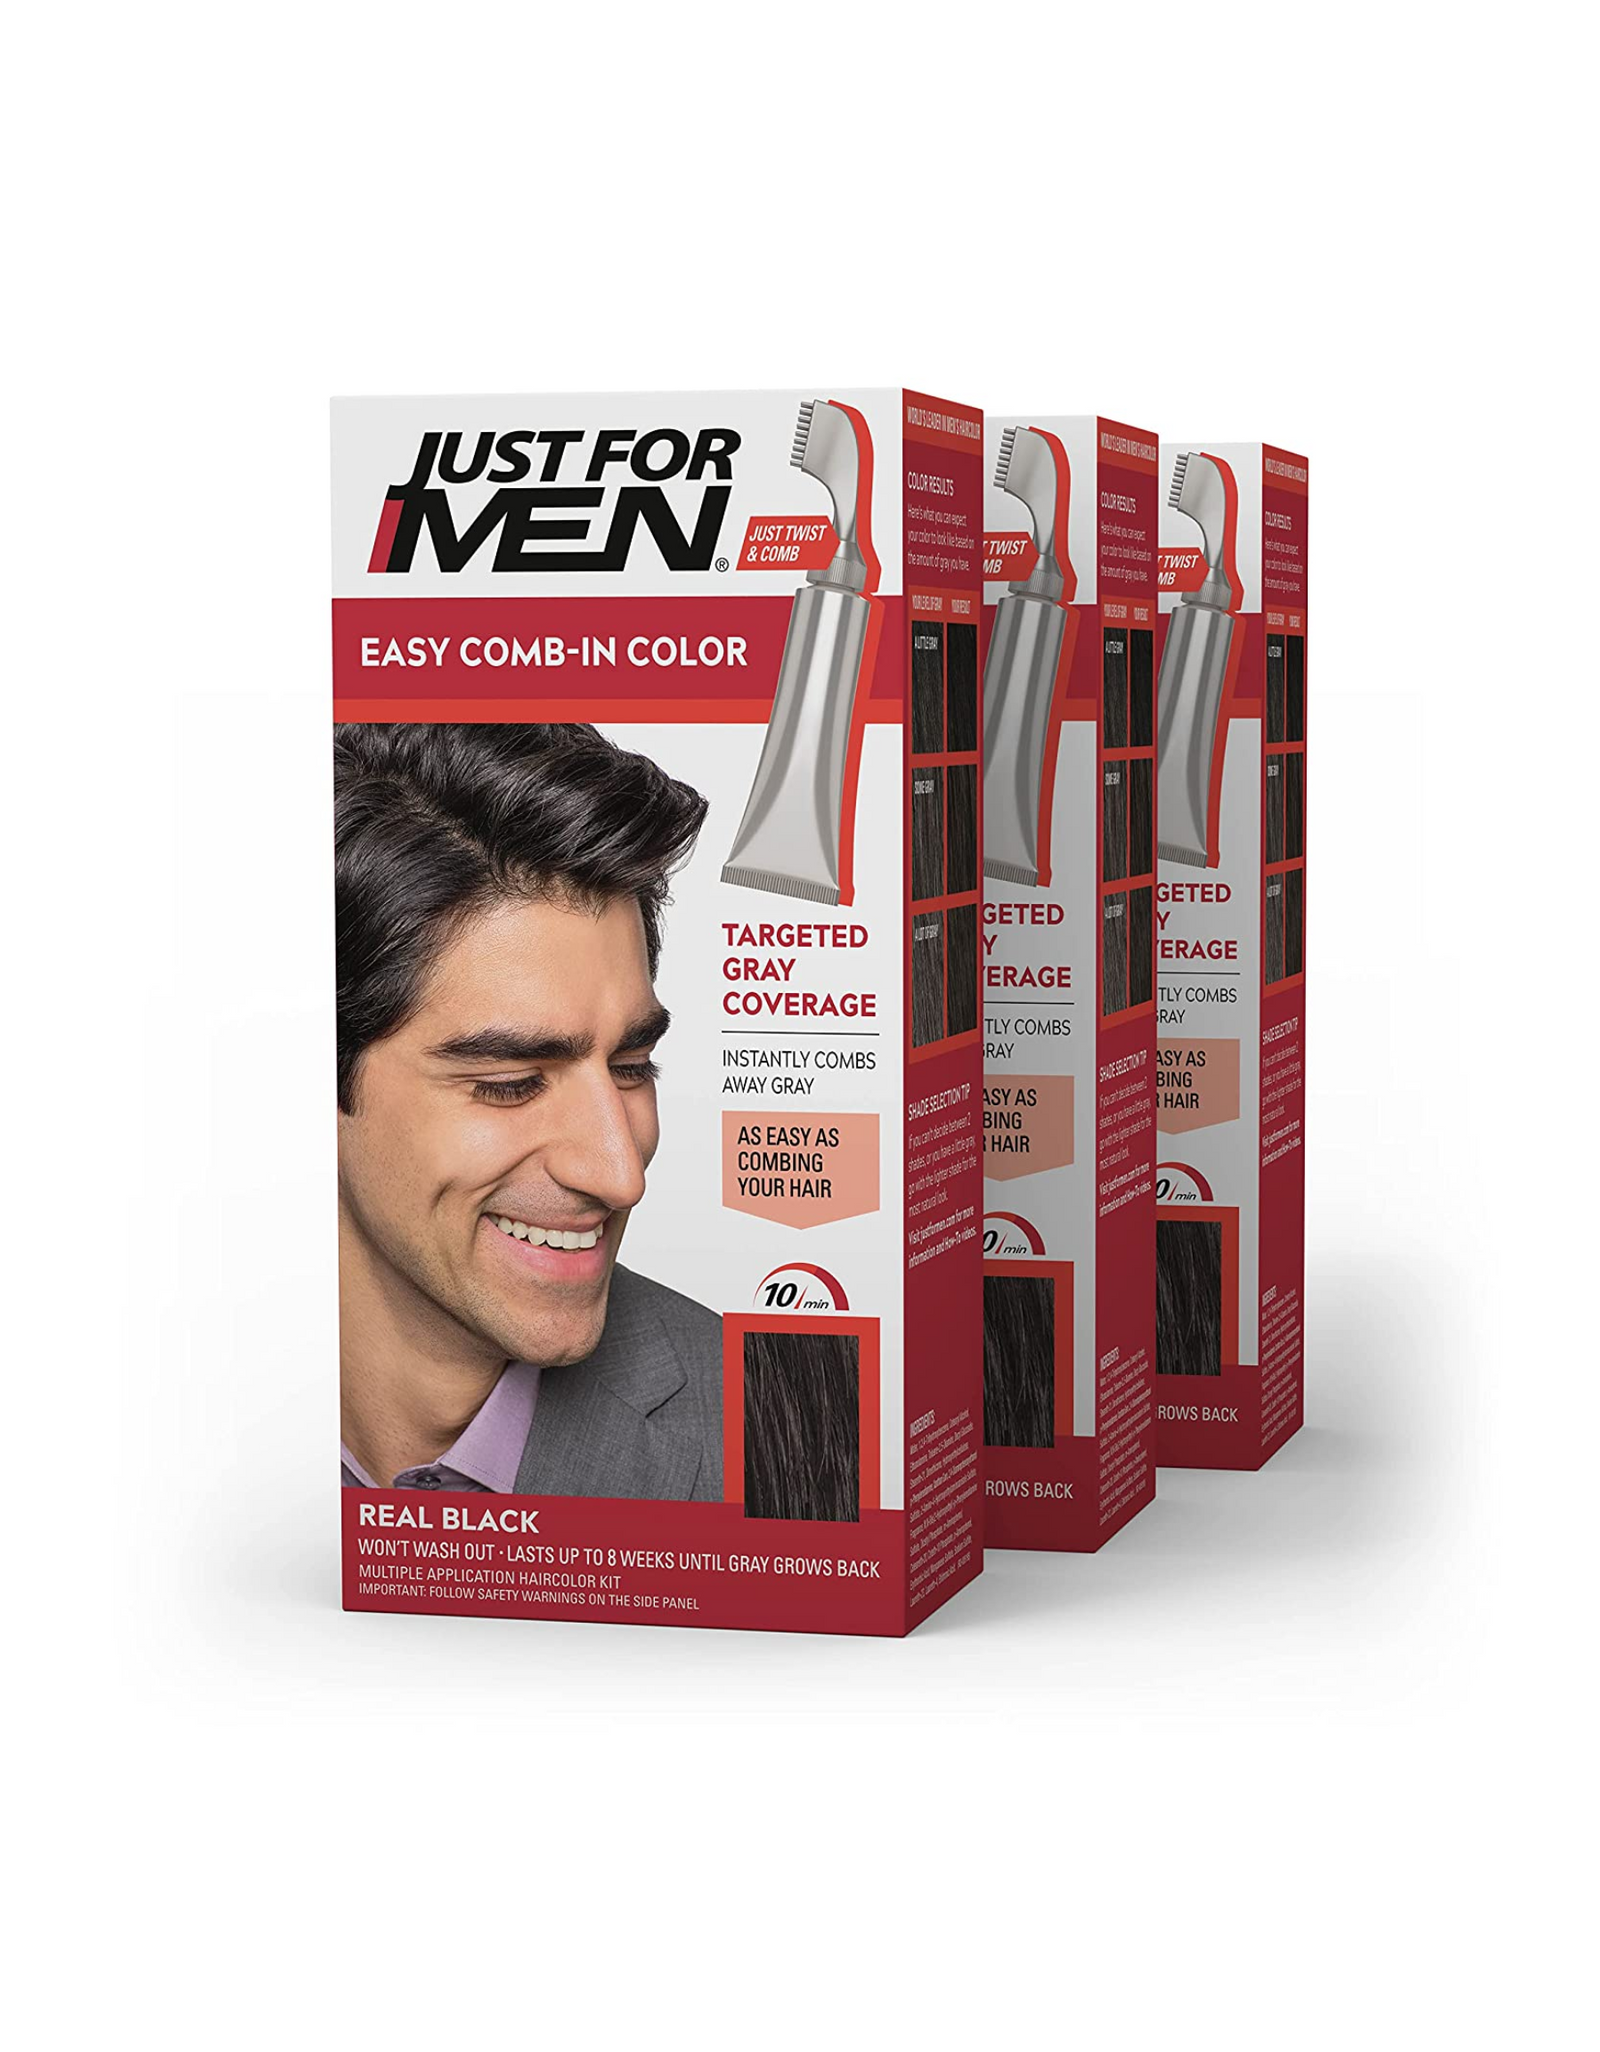 Just For Men Easy Comb-In Color Mens Hair Dye, Real Black, 3 Pack